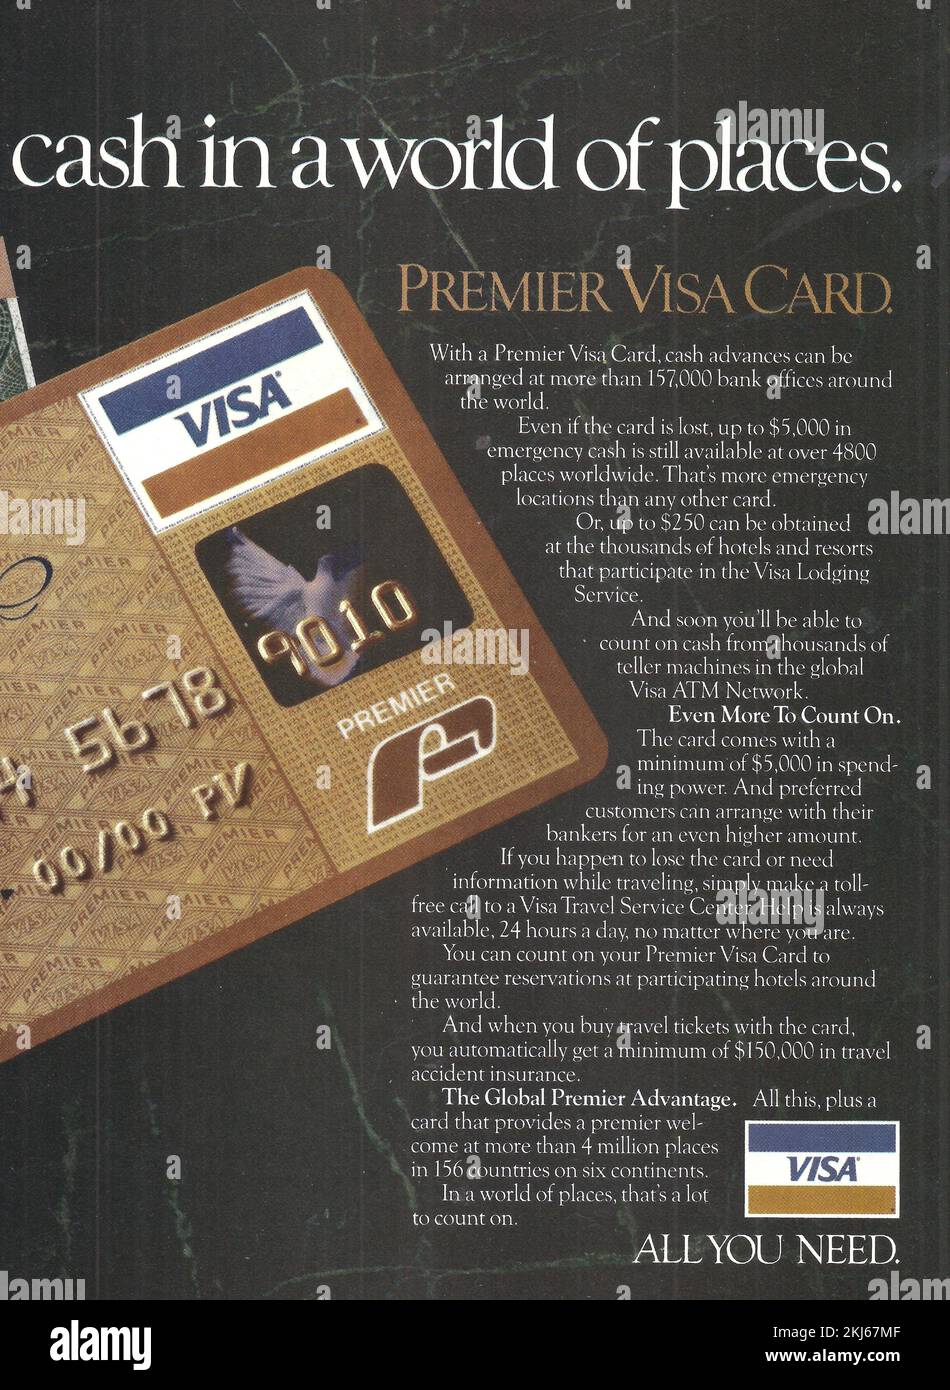 Premier Visa Card VISA Credit Card vintage paper advertisement Visa magazine advert Stock Photo